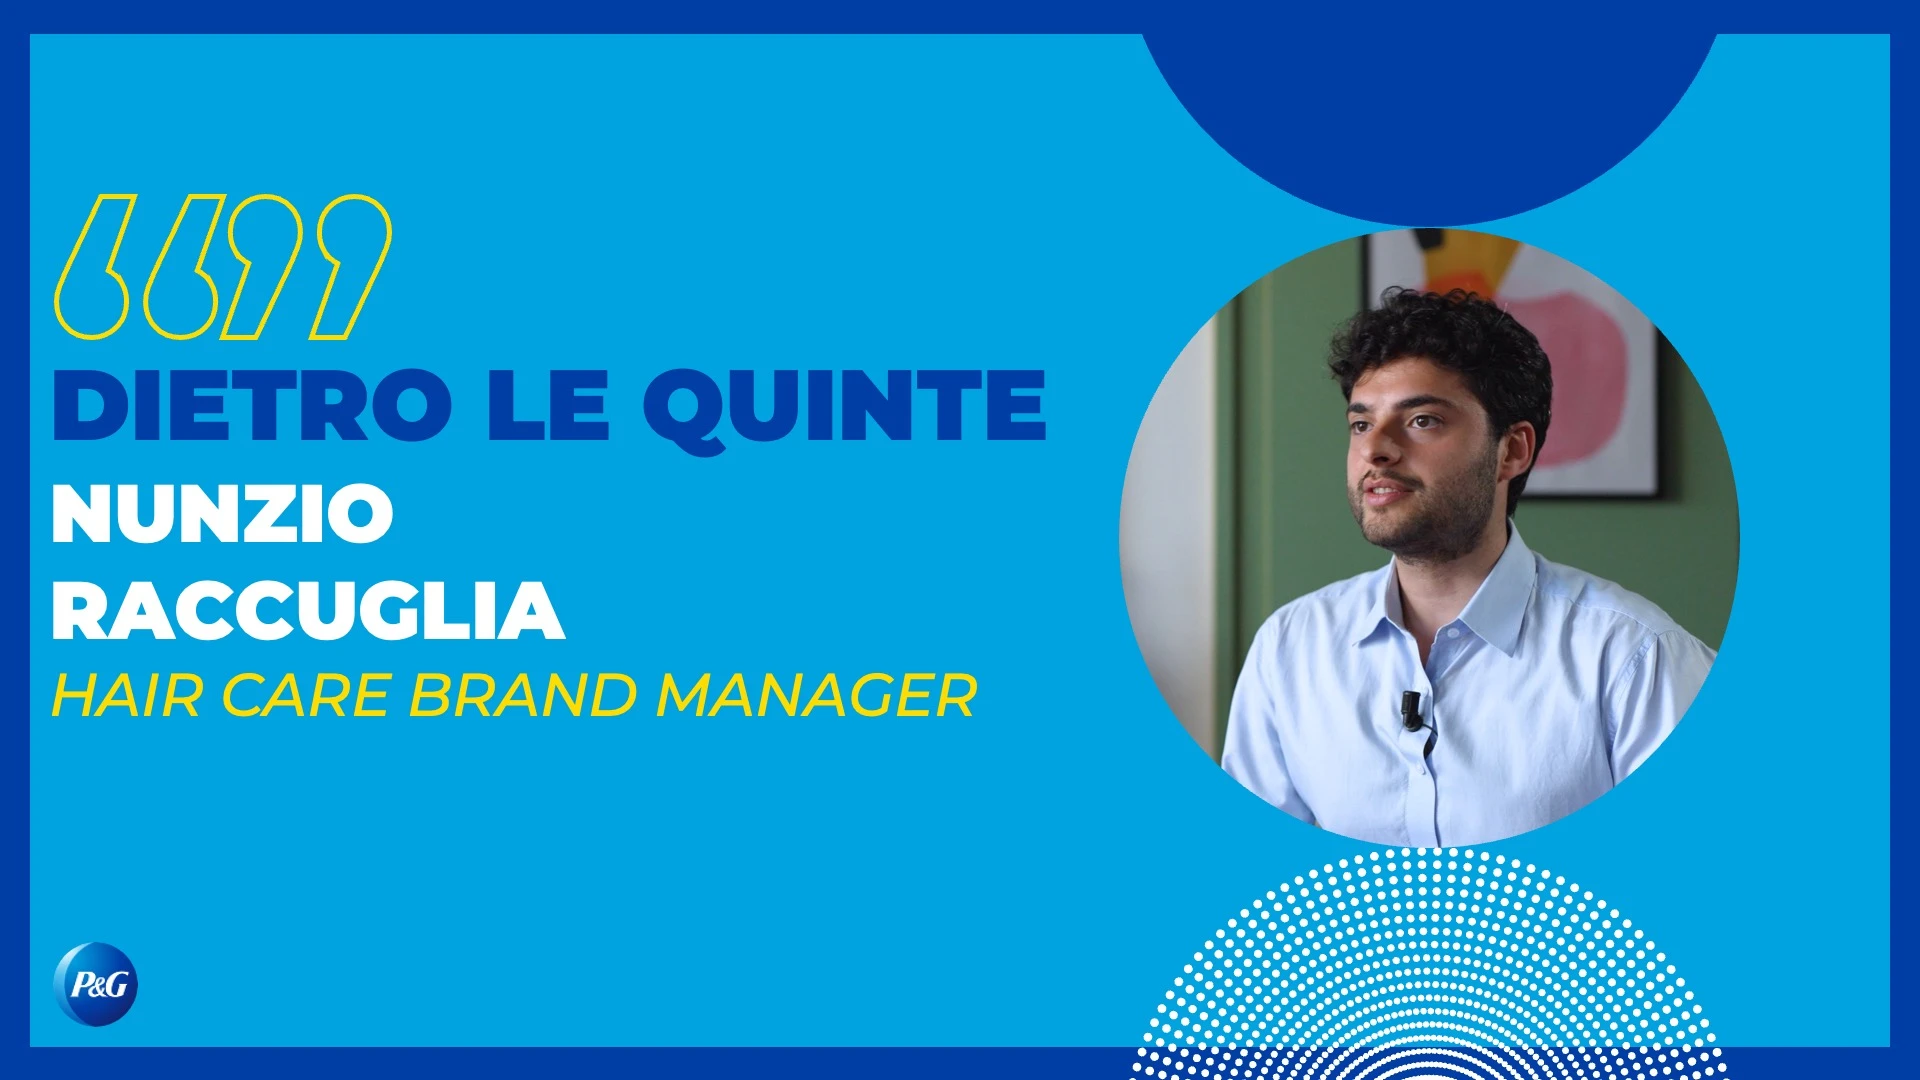 Nunzio Raccuglia, Hair Care Brand Manager